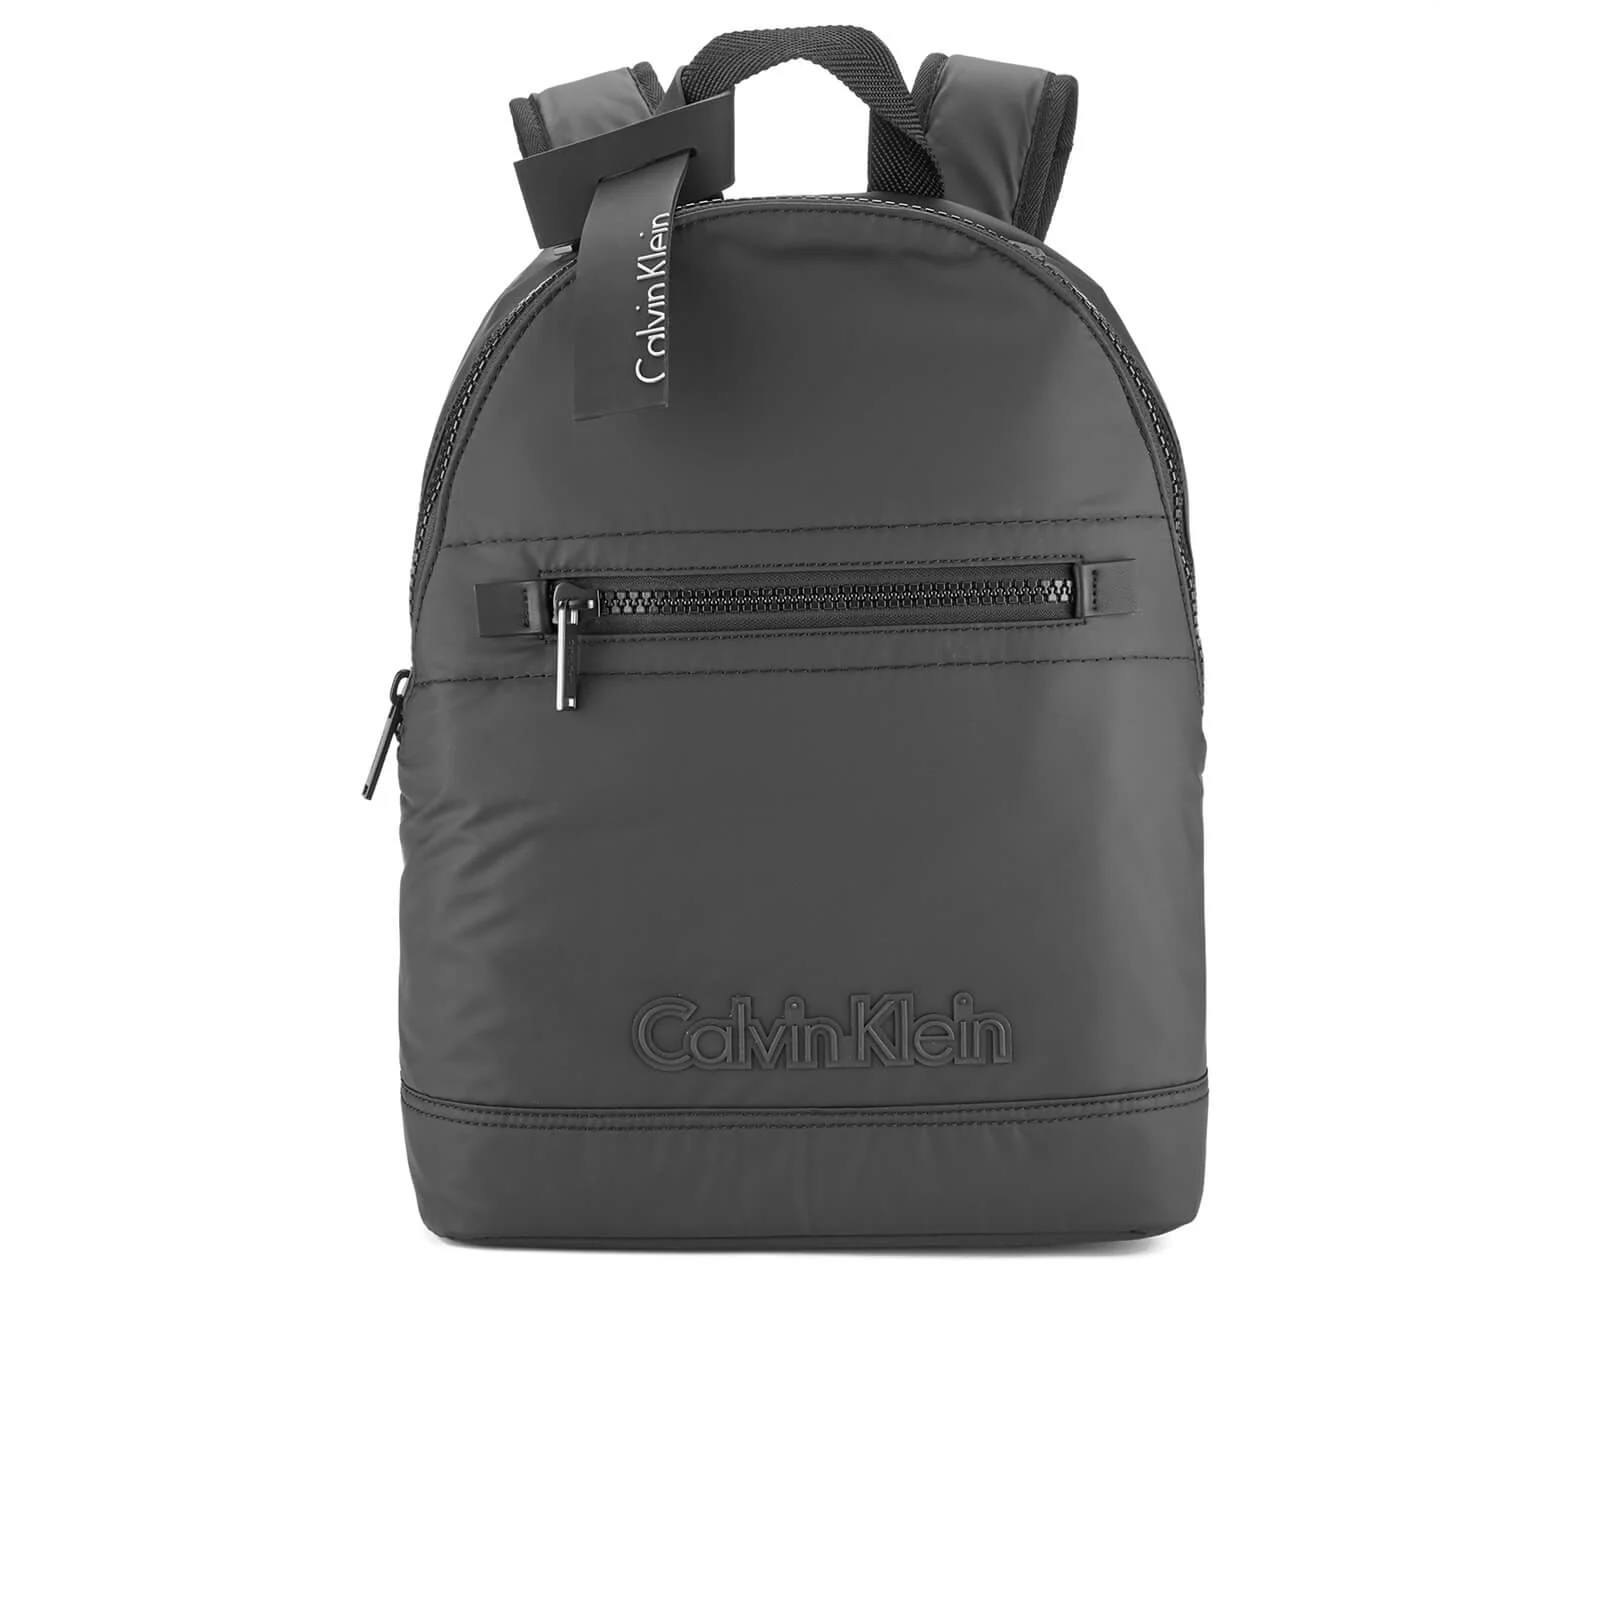 Calvin Klein Men's Metro Backpack - Black Image 1